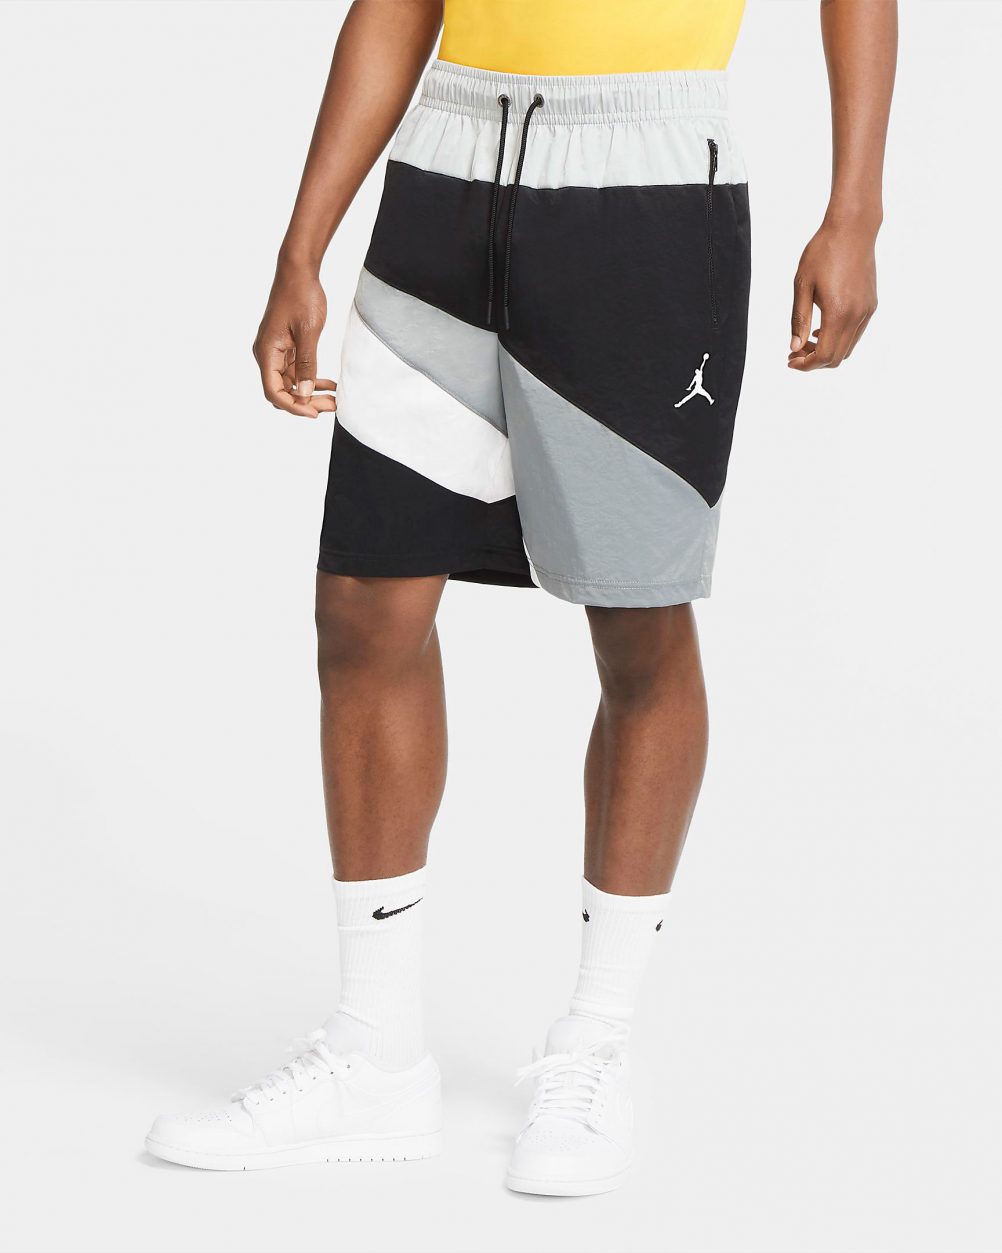 Air Jordan 1 Low Light Smoke Grey Clothing | SneakerFits.com